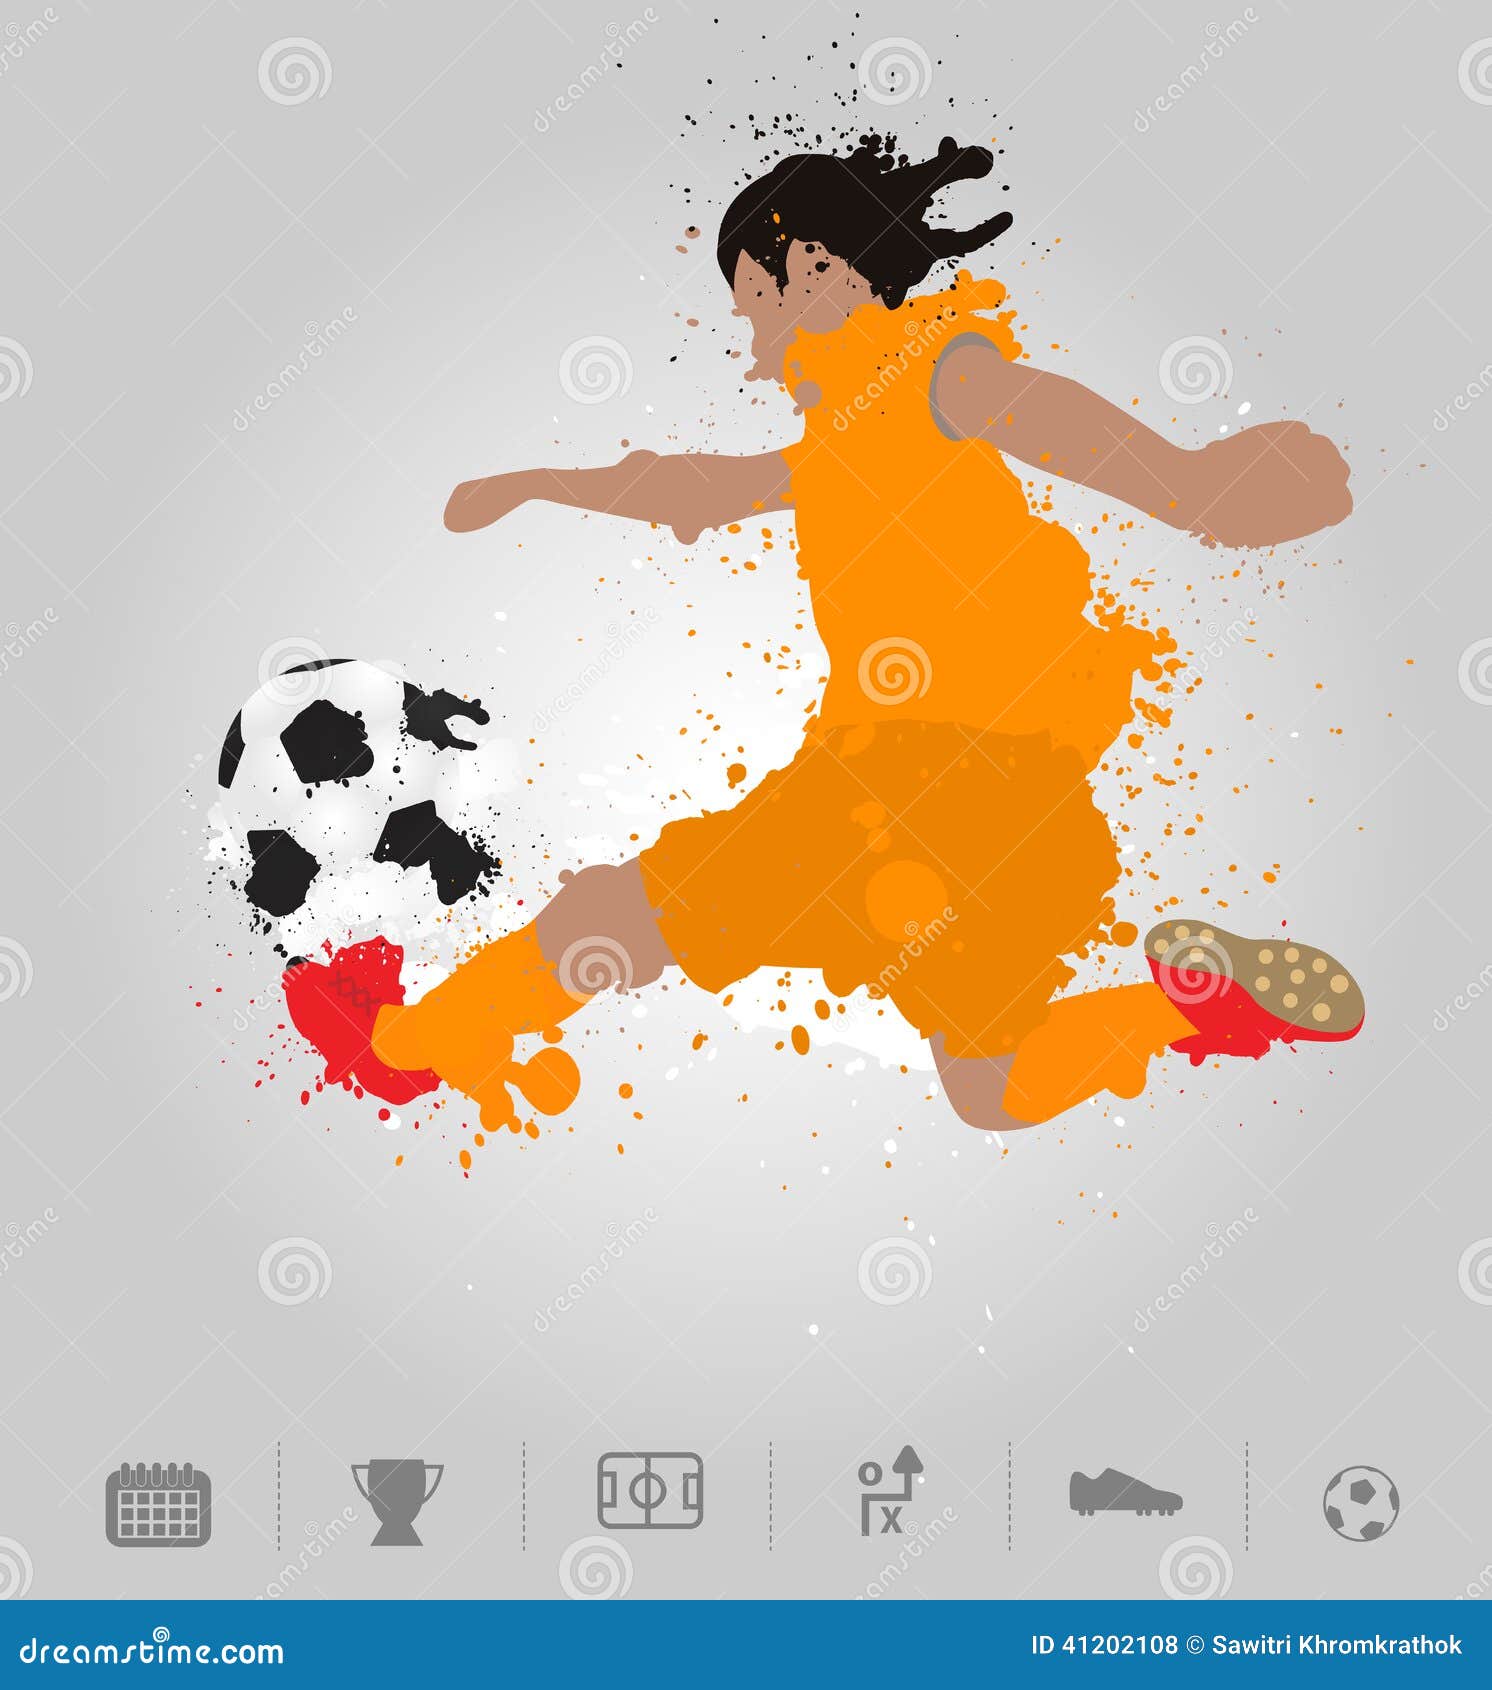 soccer player kicks the ball with paint splatter 